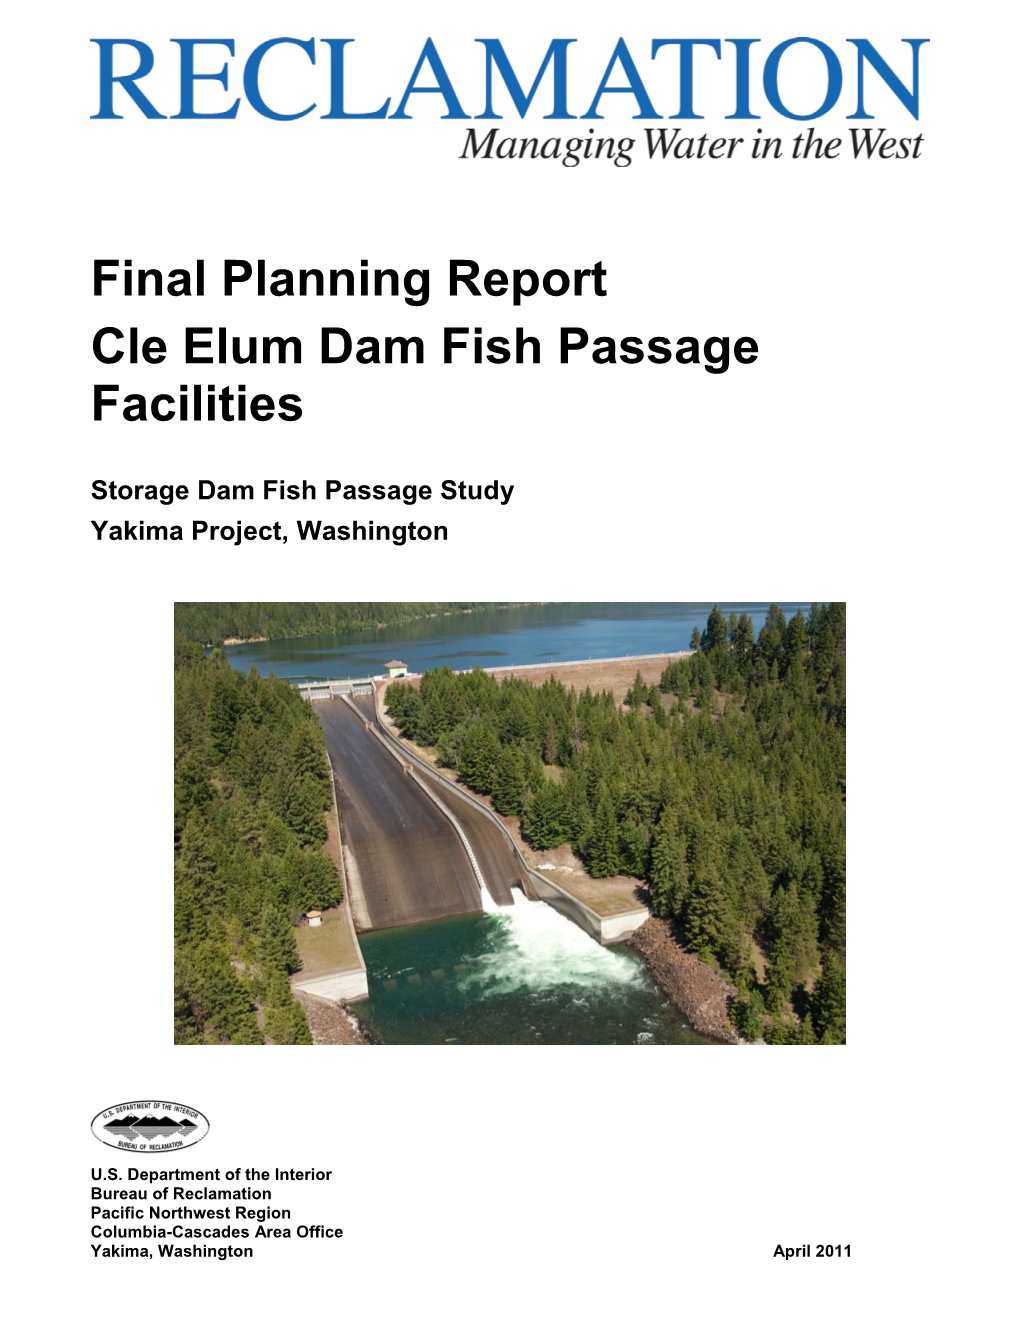 Final Planning Report Cle Elum Dam Fish Passage Facilities